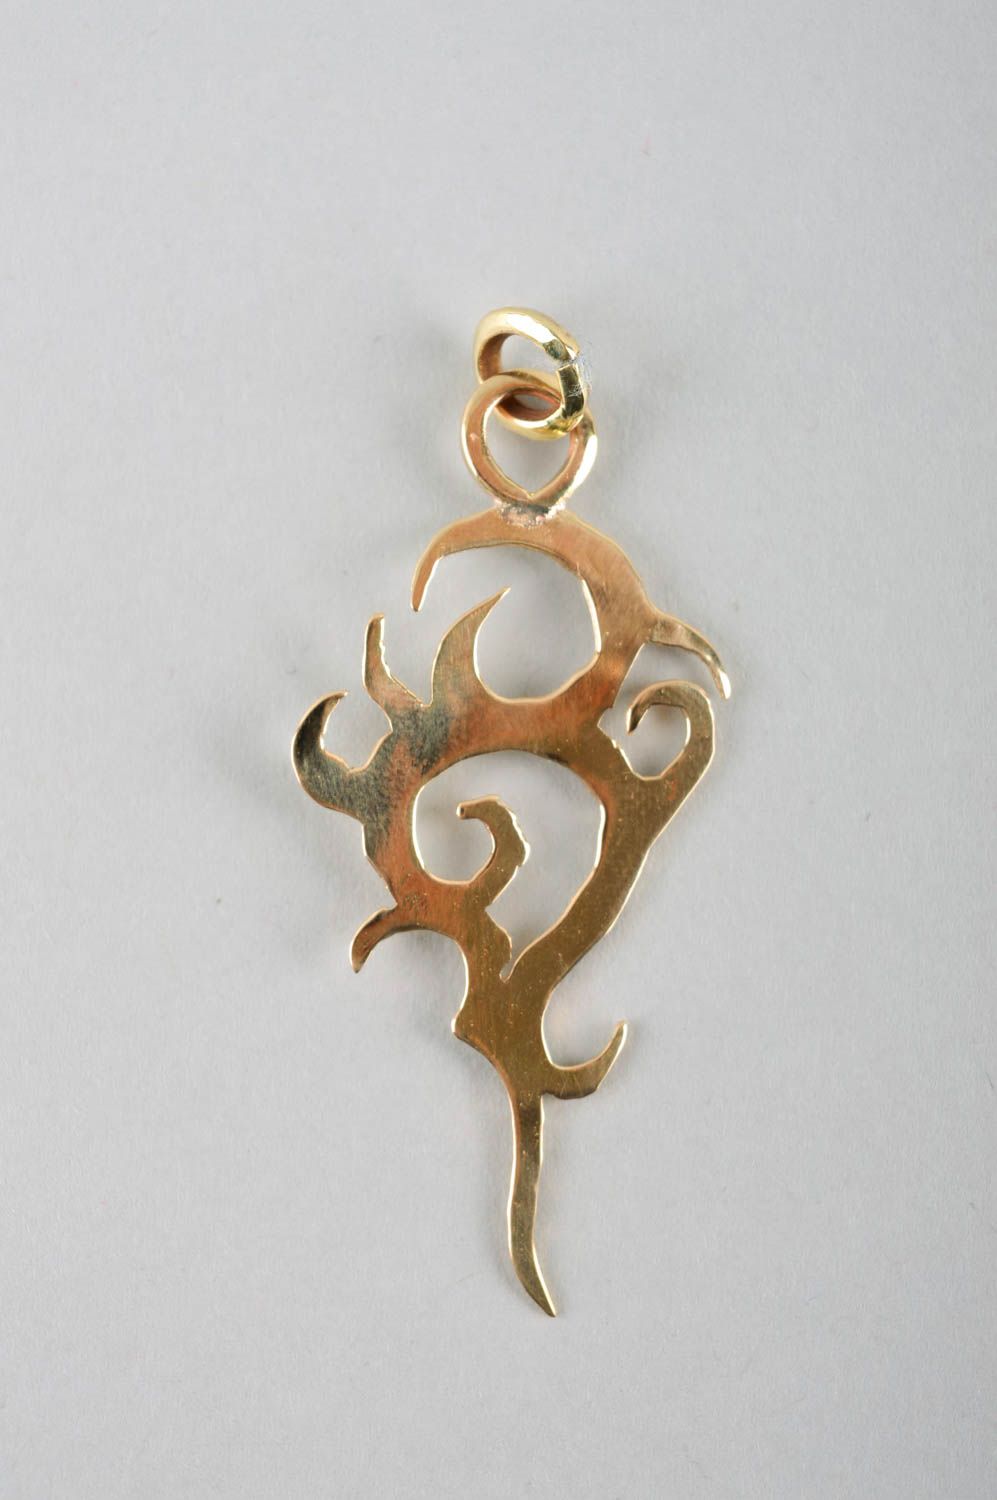 Stylish handmade metal pendant artisan jewelry designs beautiful jewellery photo 2